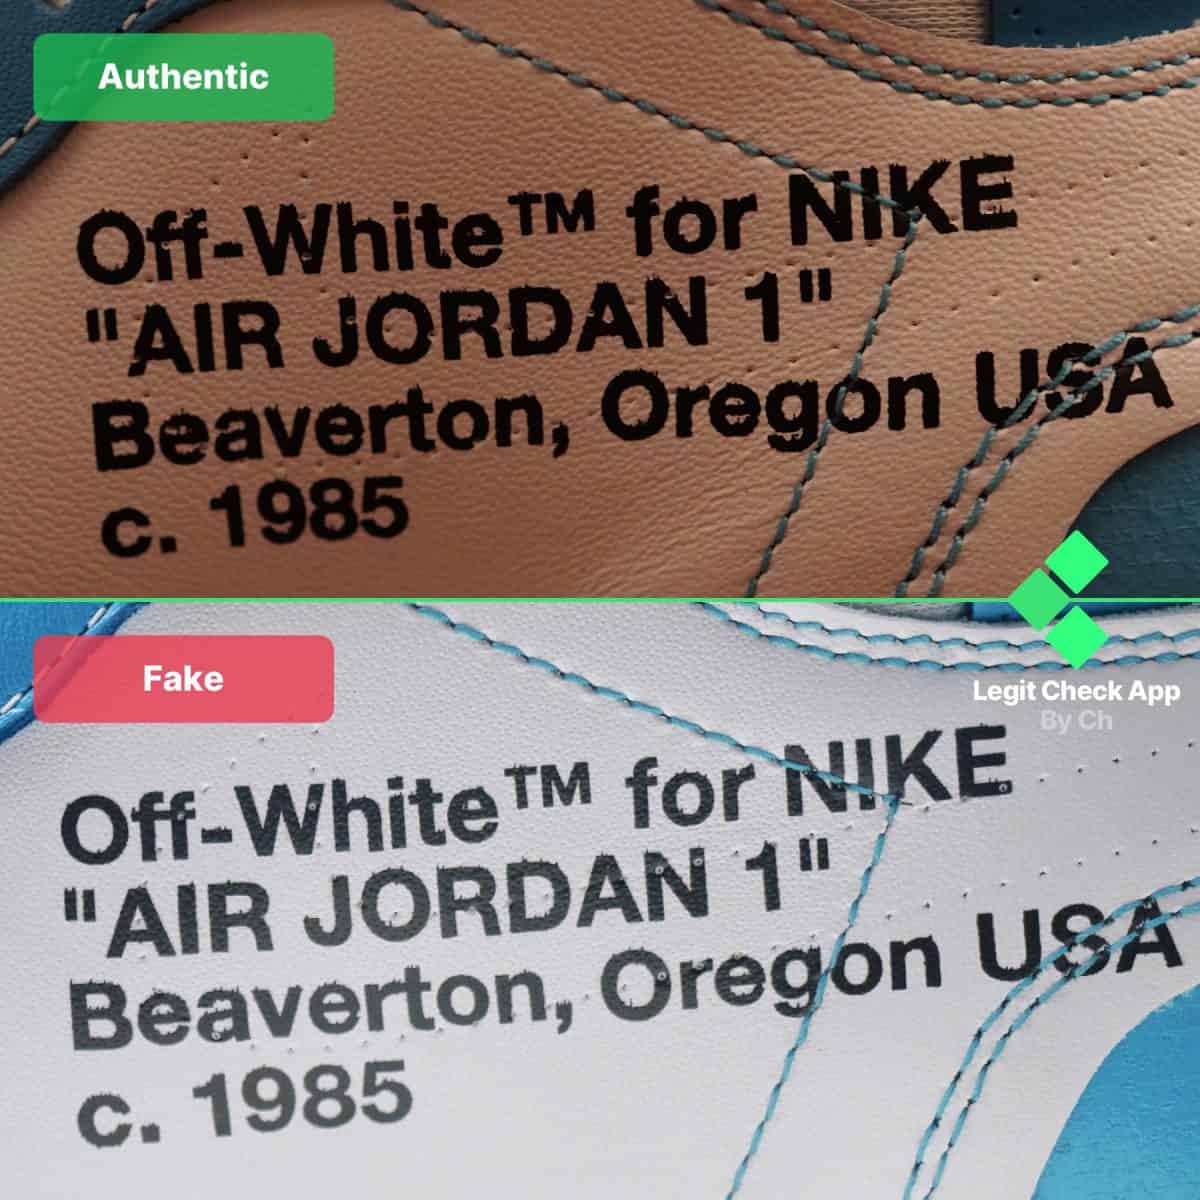 Are My Off-White Jordan 1 UNC Fake?